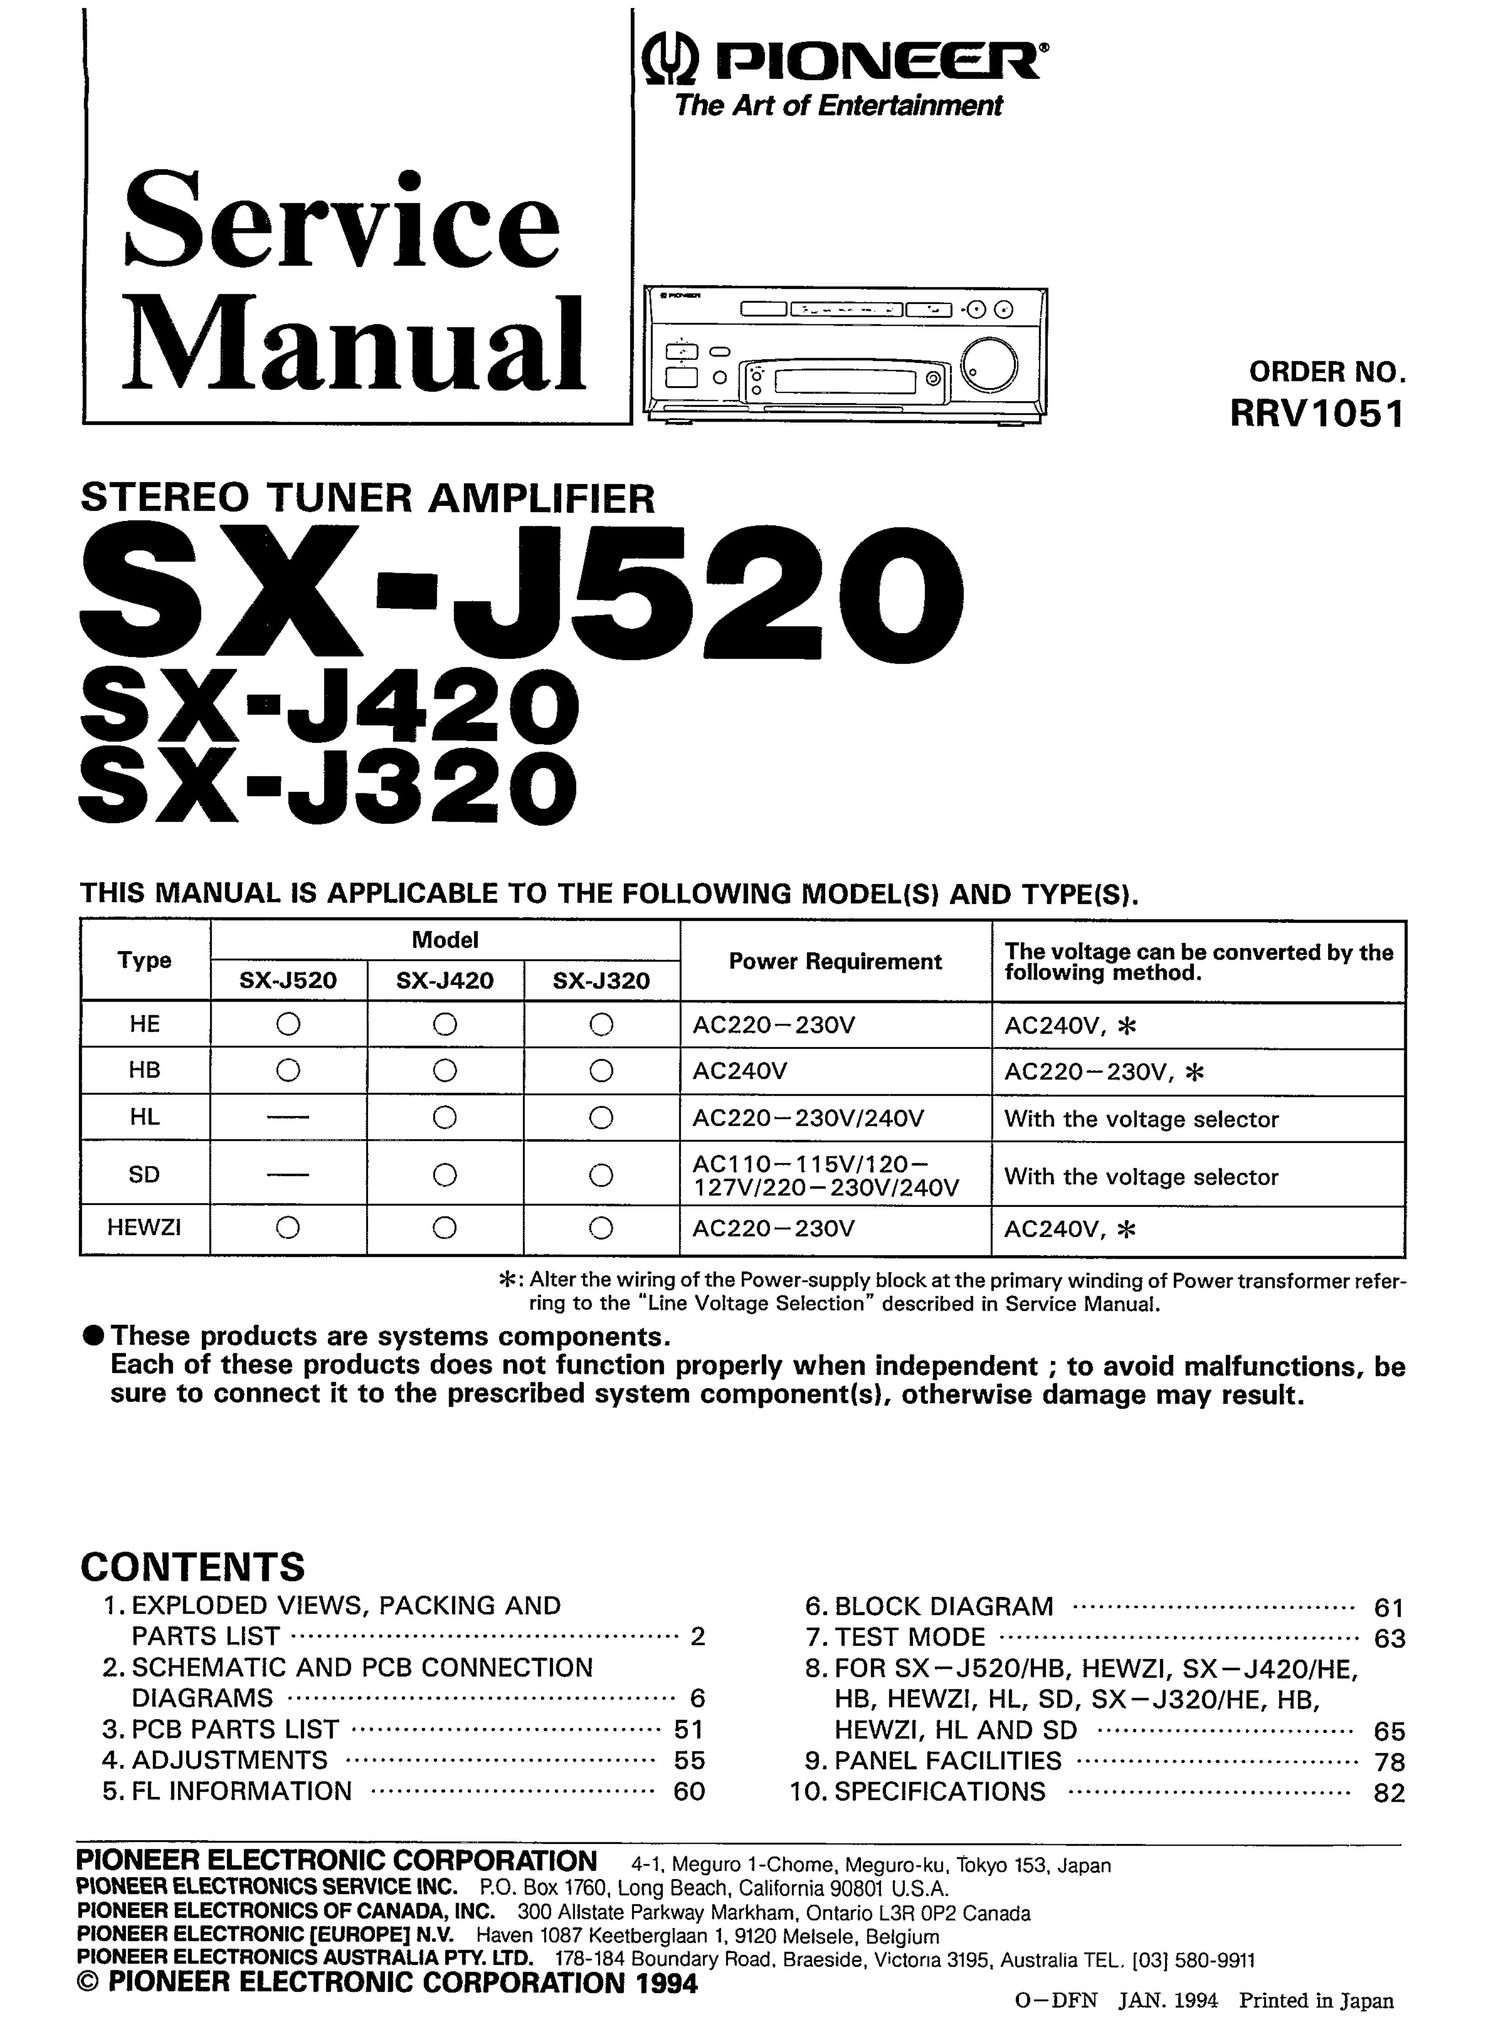 pioneer sxj 520 service manual